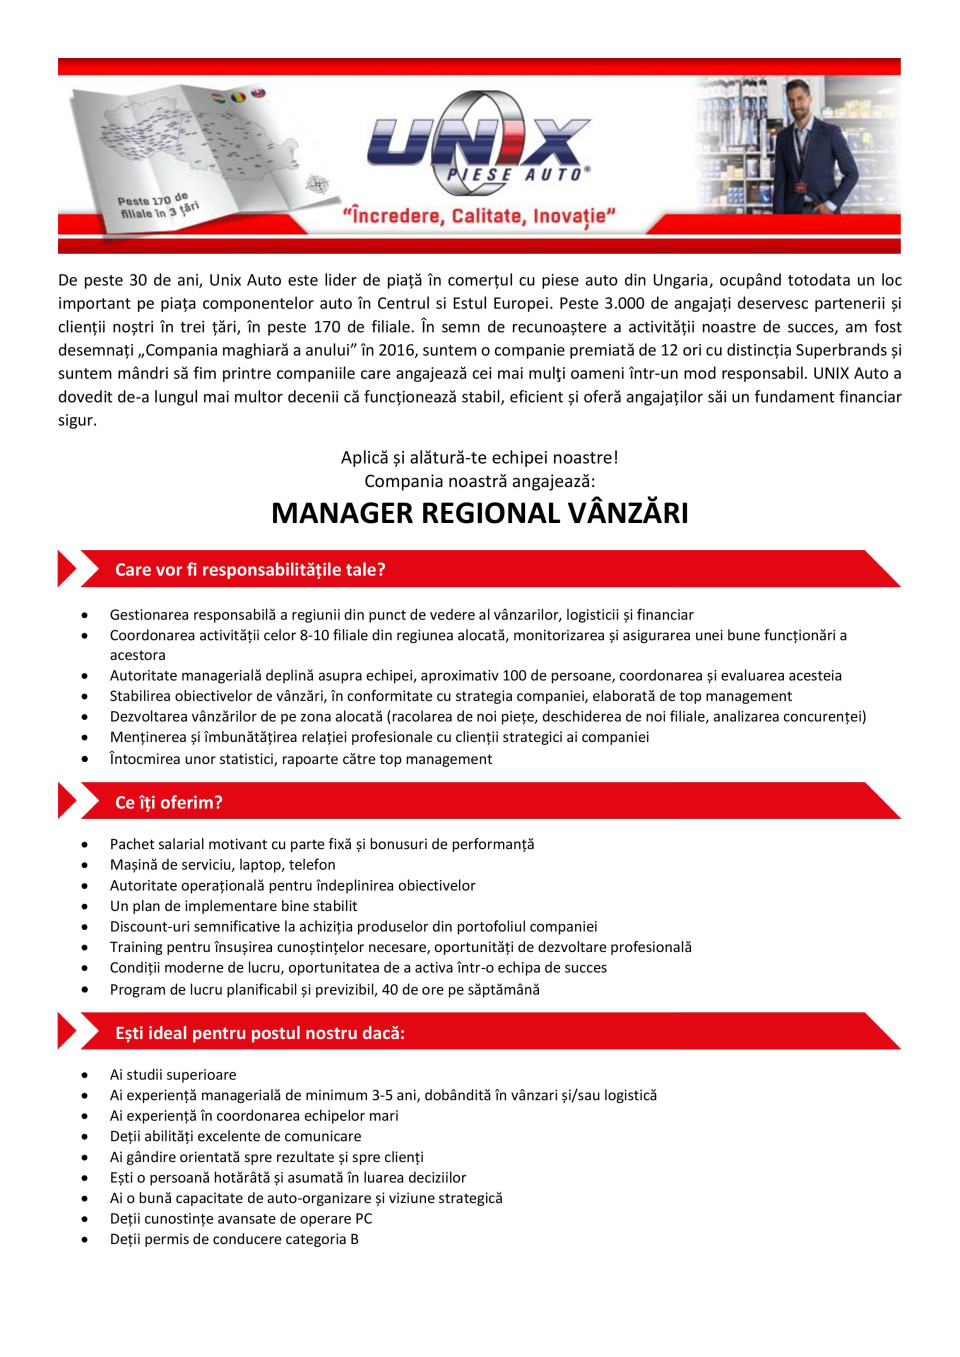 Manager Regional Vanzari